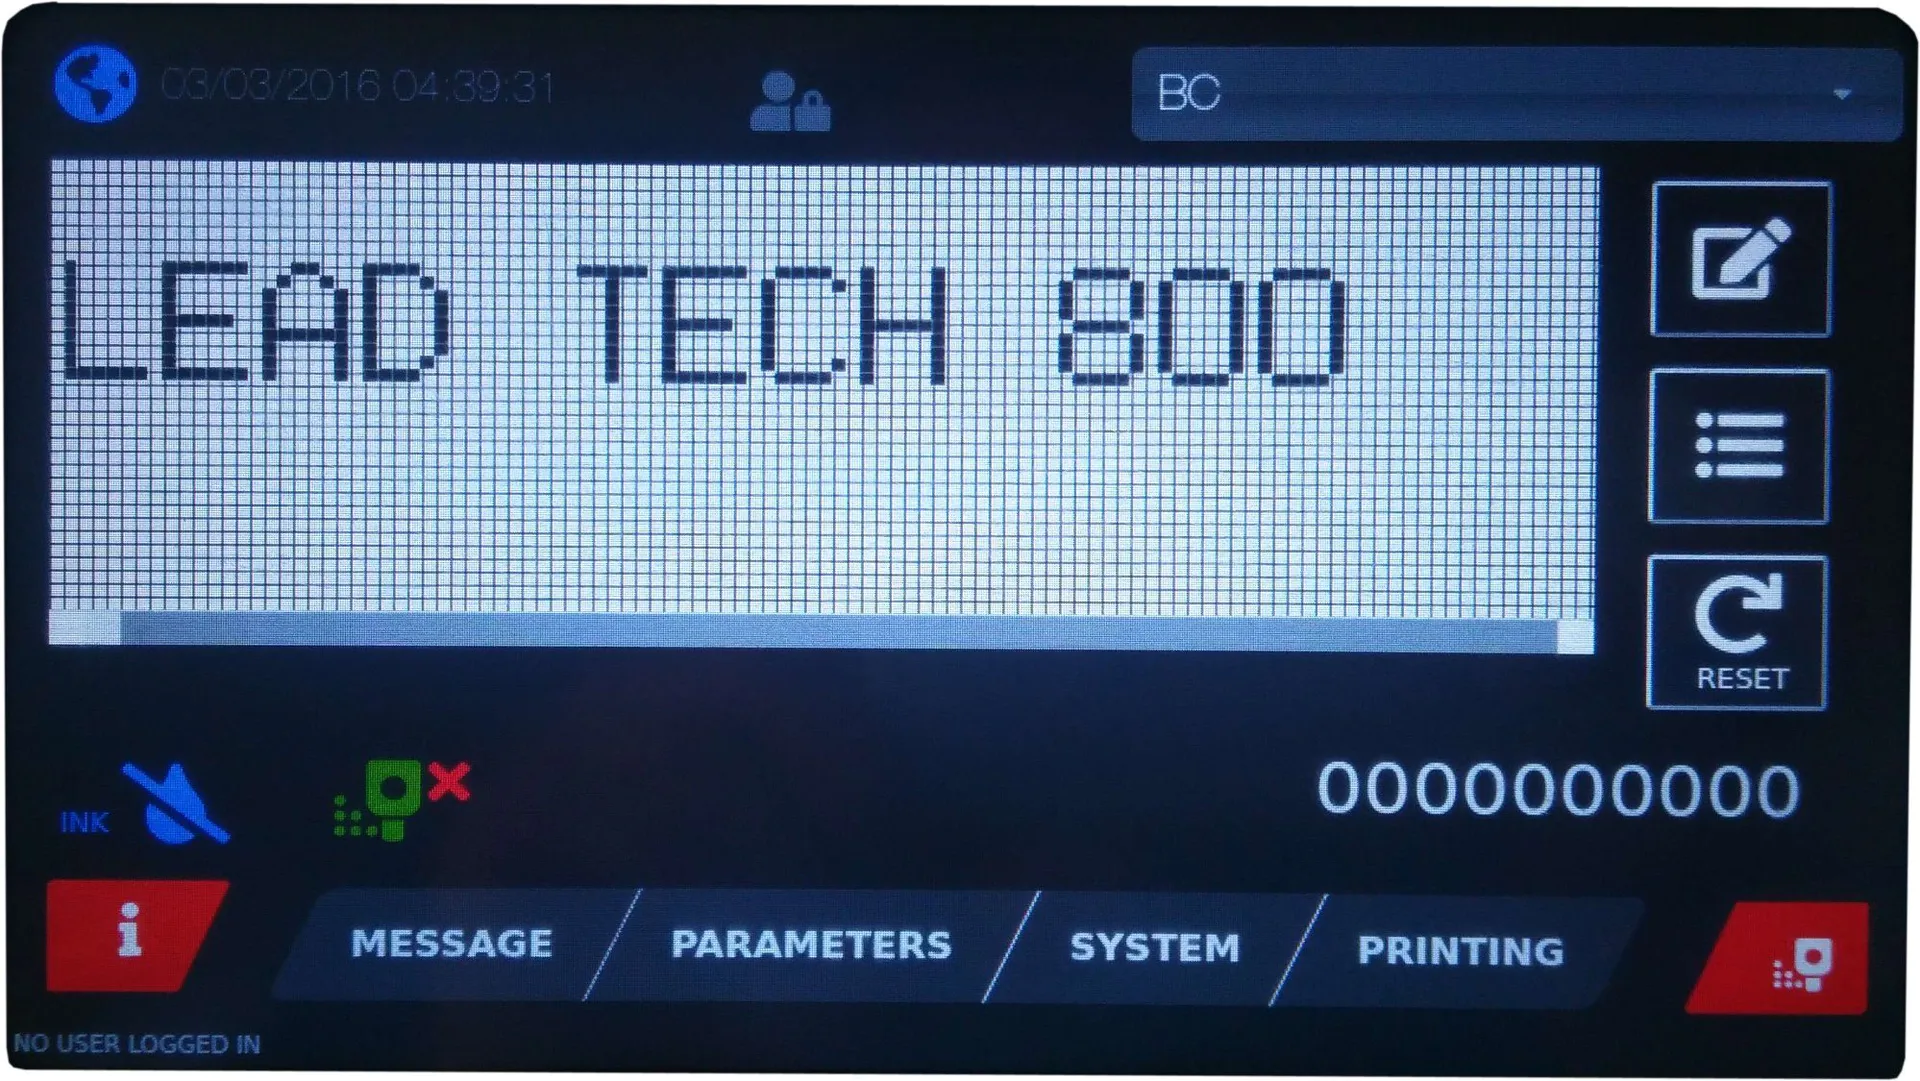 Lead Tech Lt800 Expiry Date Printing Coding Cij Inkjet Printer